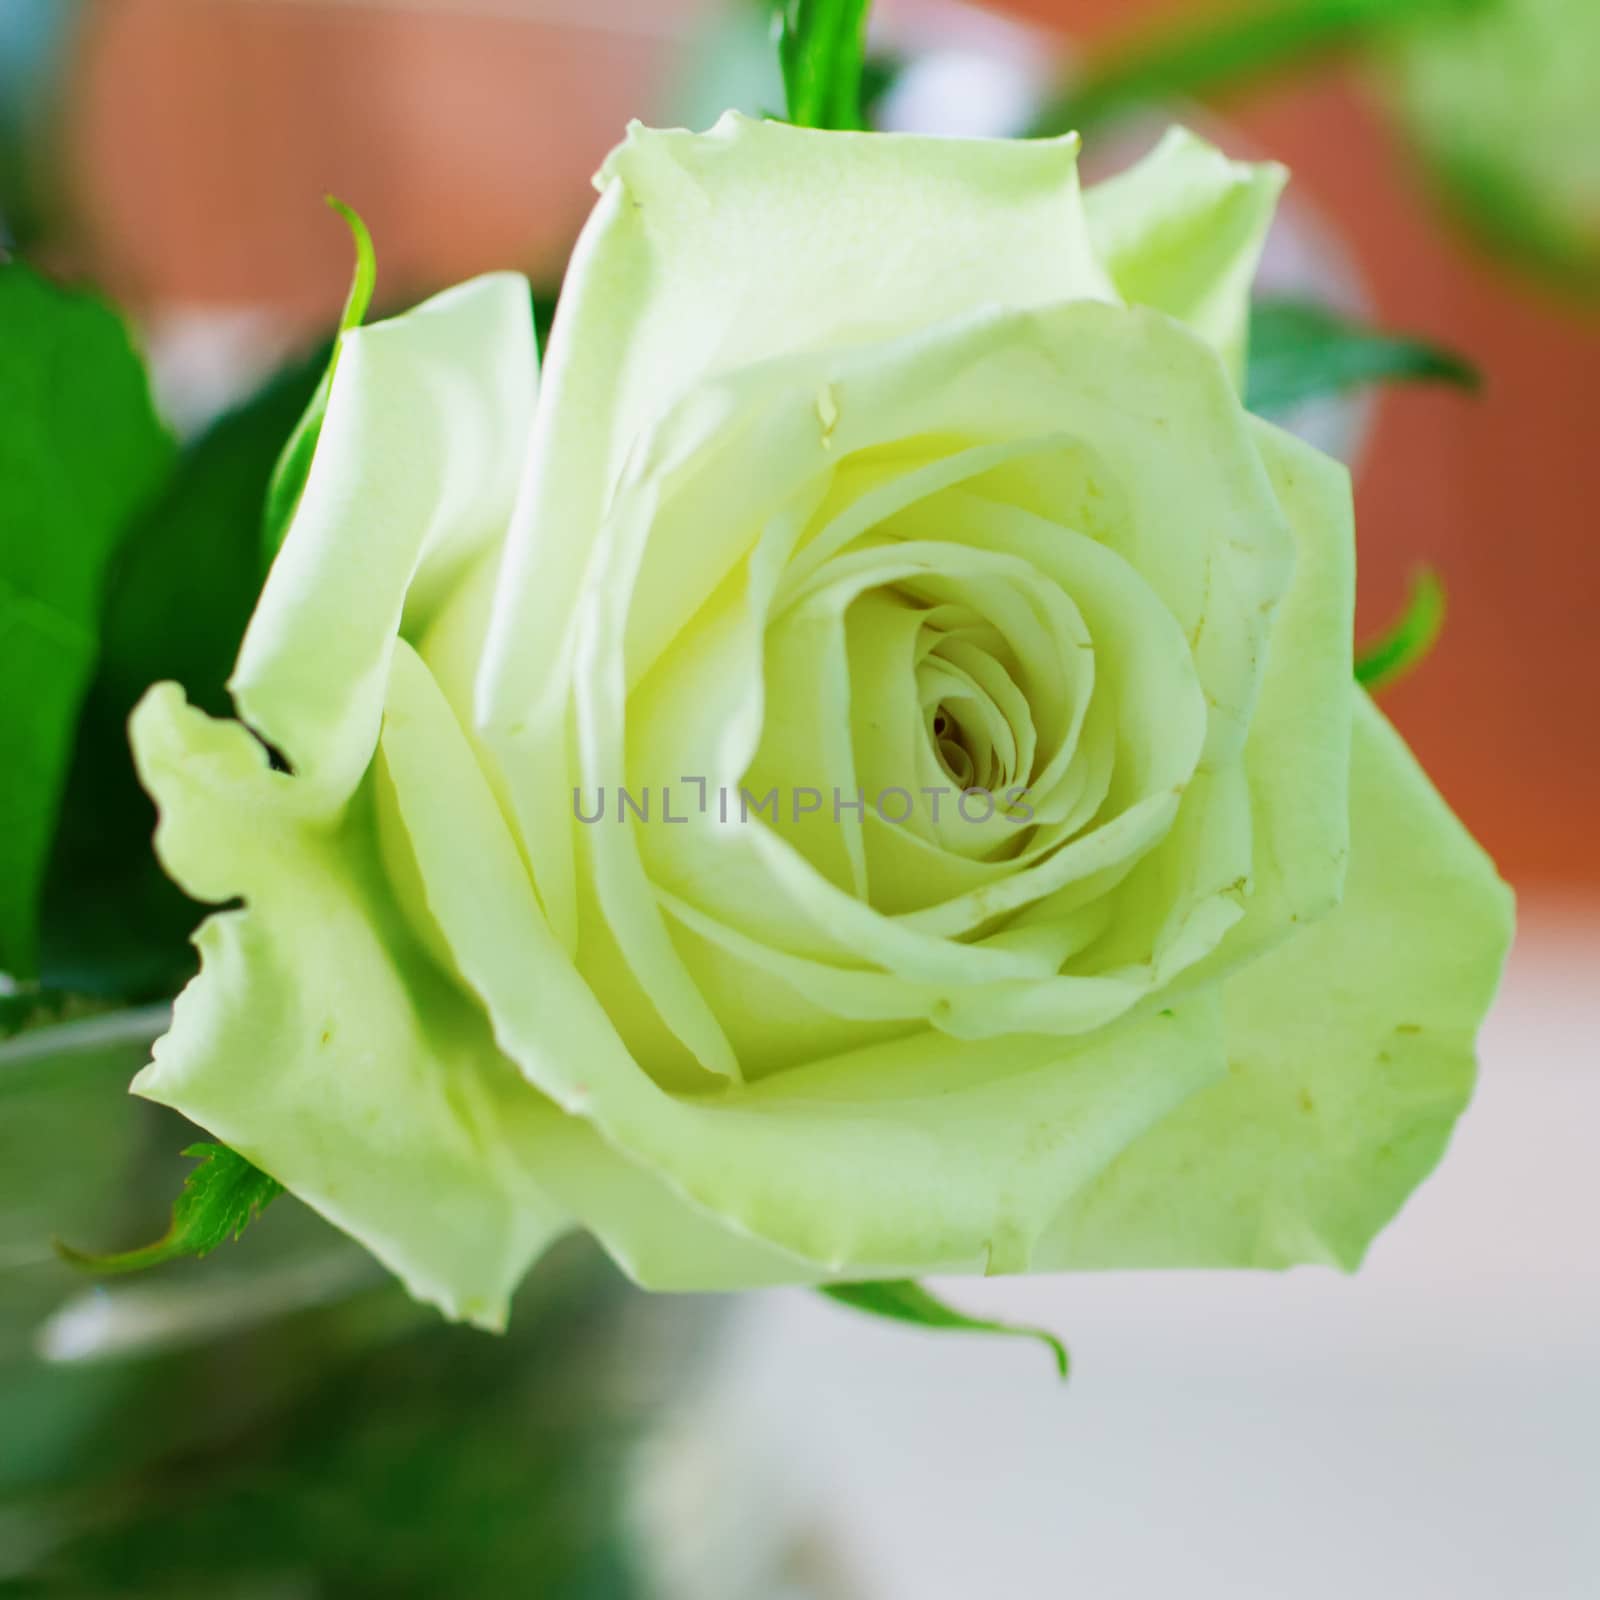 White rose in a vase over lite background